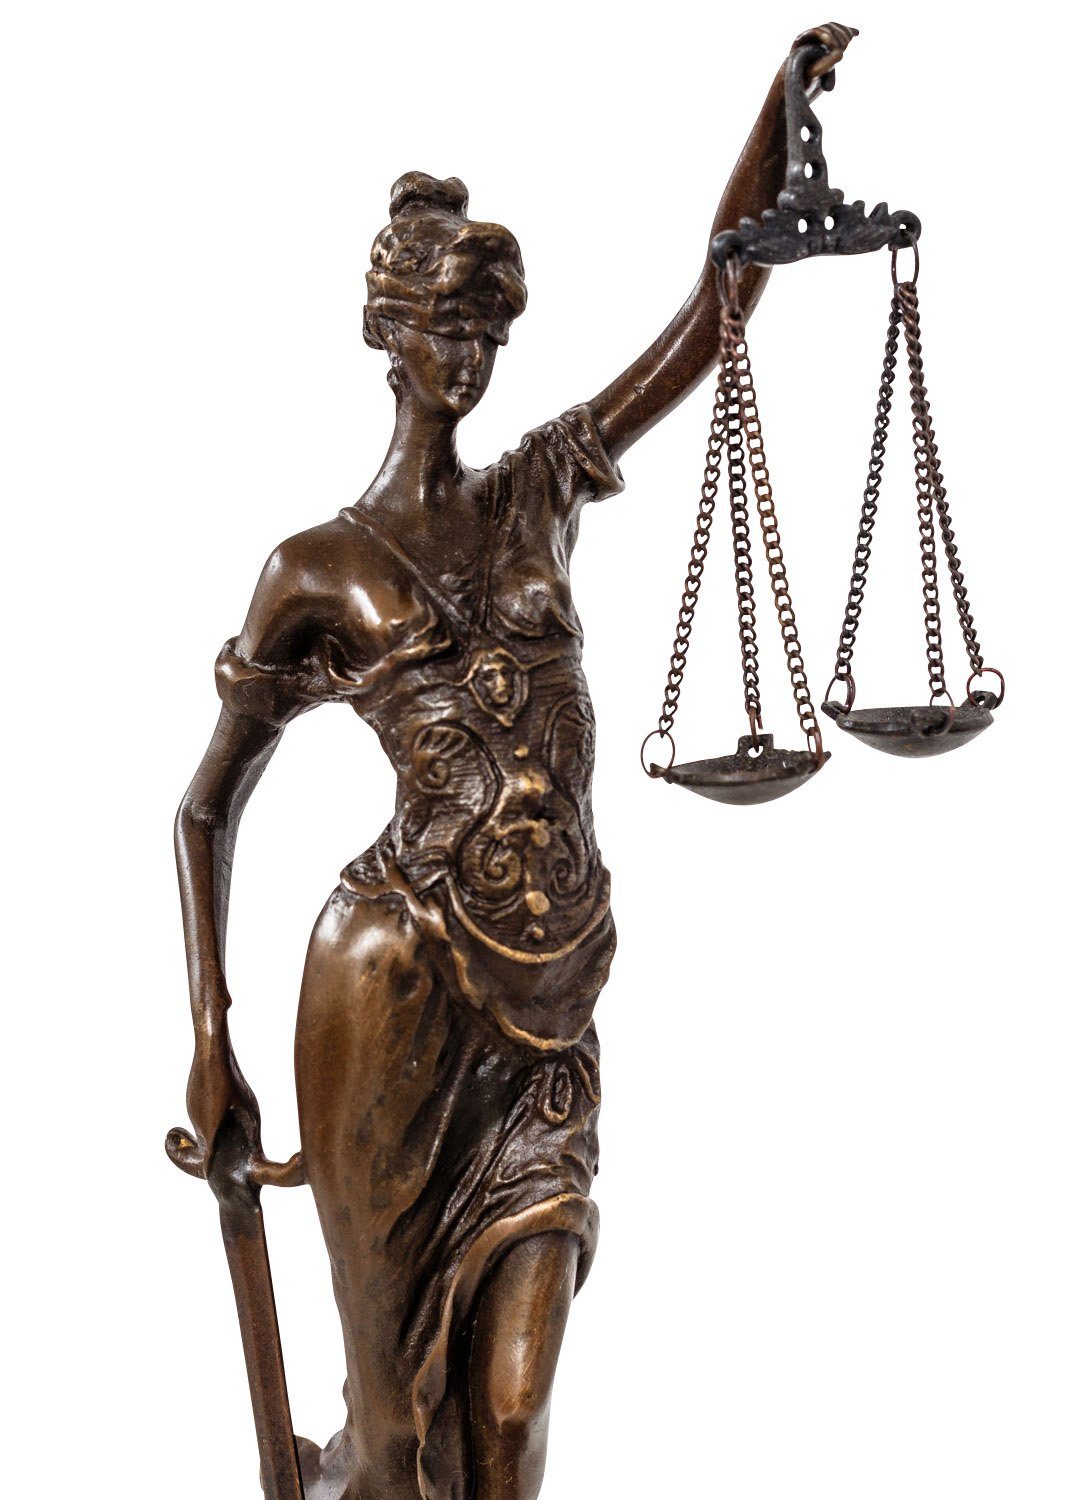 Aubaho Skulptur Bronzeskulptur Justitia Justizia Bronze Skulptur Figur Ant Bronzefigur